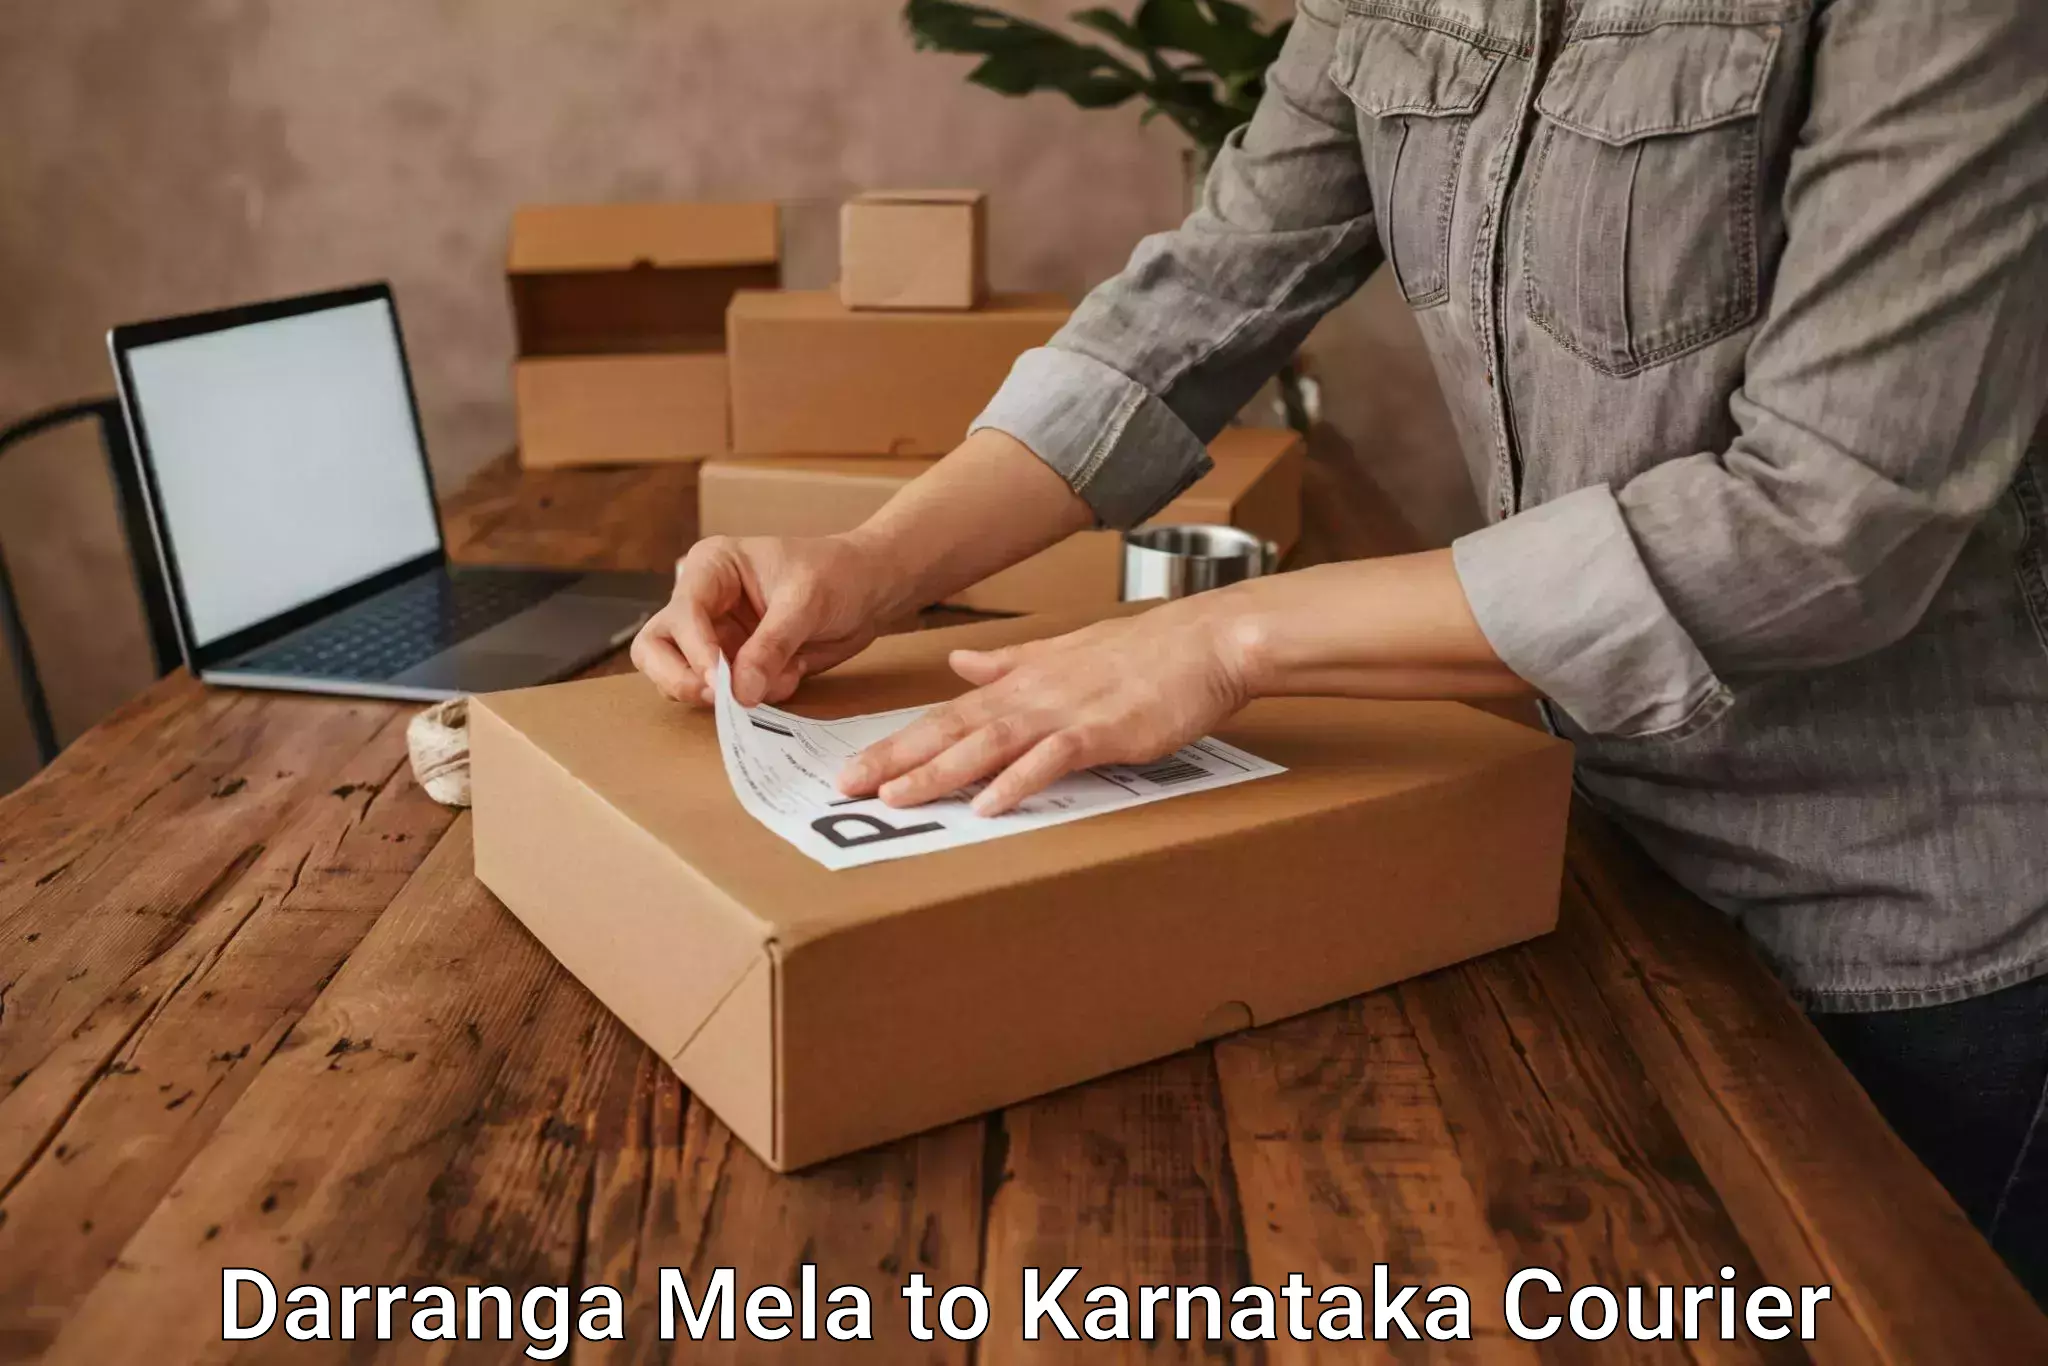 Nationwide courier service Darranga Mela to Dharwad